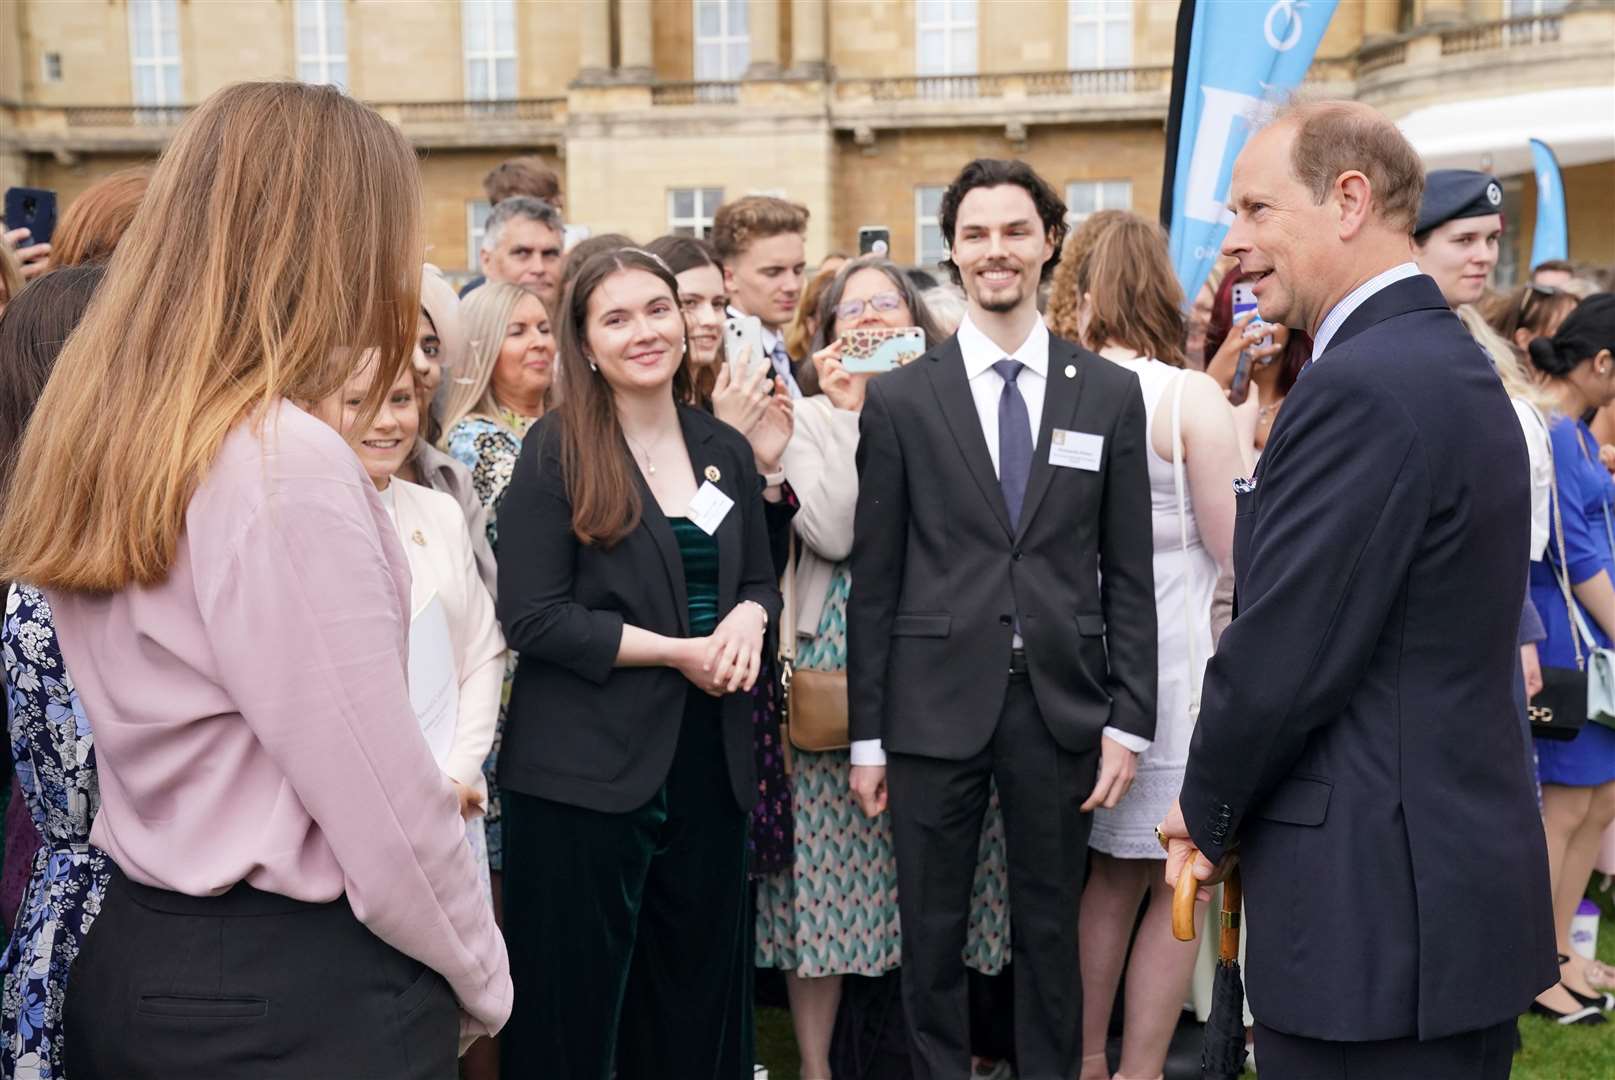 Edward meets Duke of Edinburgh gold award holders and their families in the palace garden (Jonathan Brady/PA)